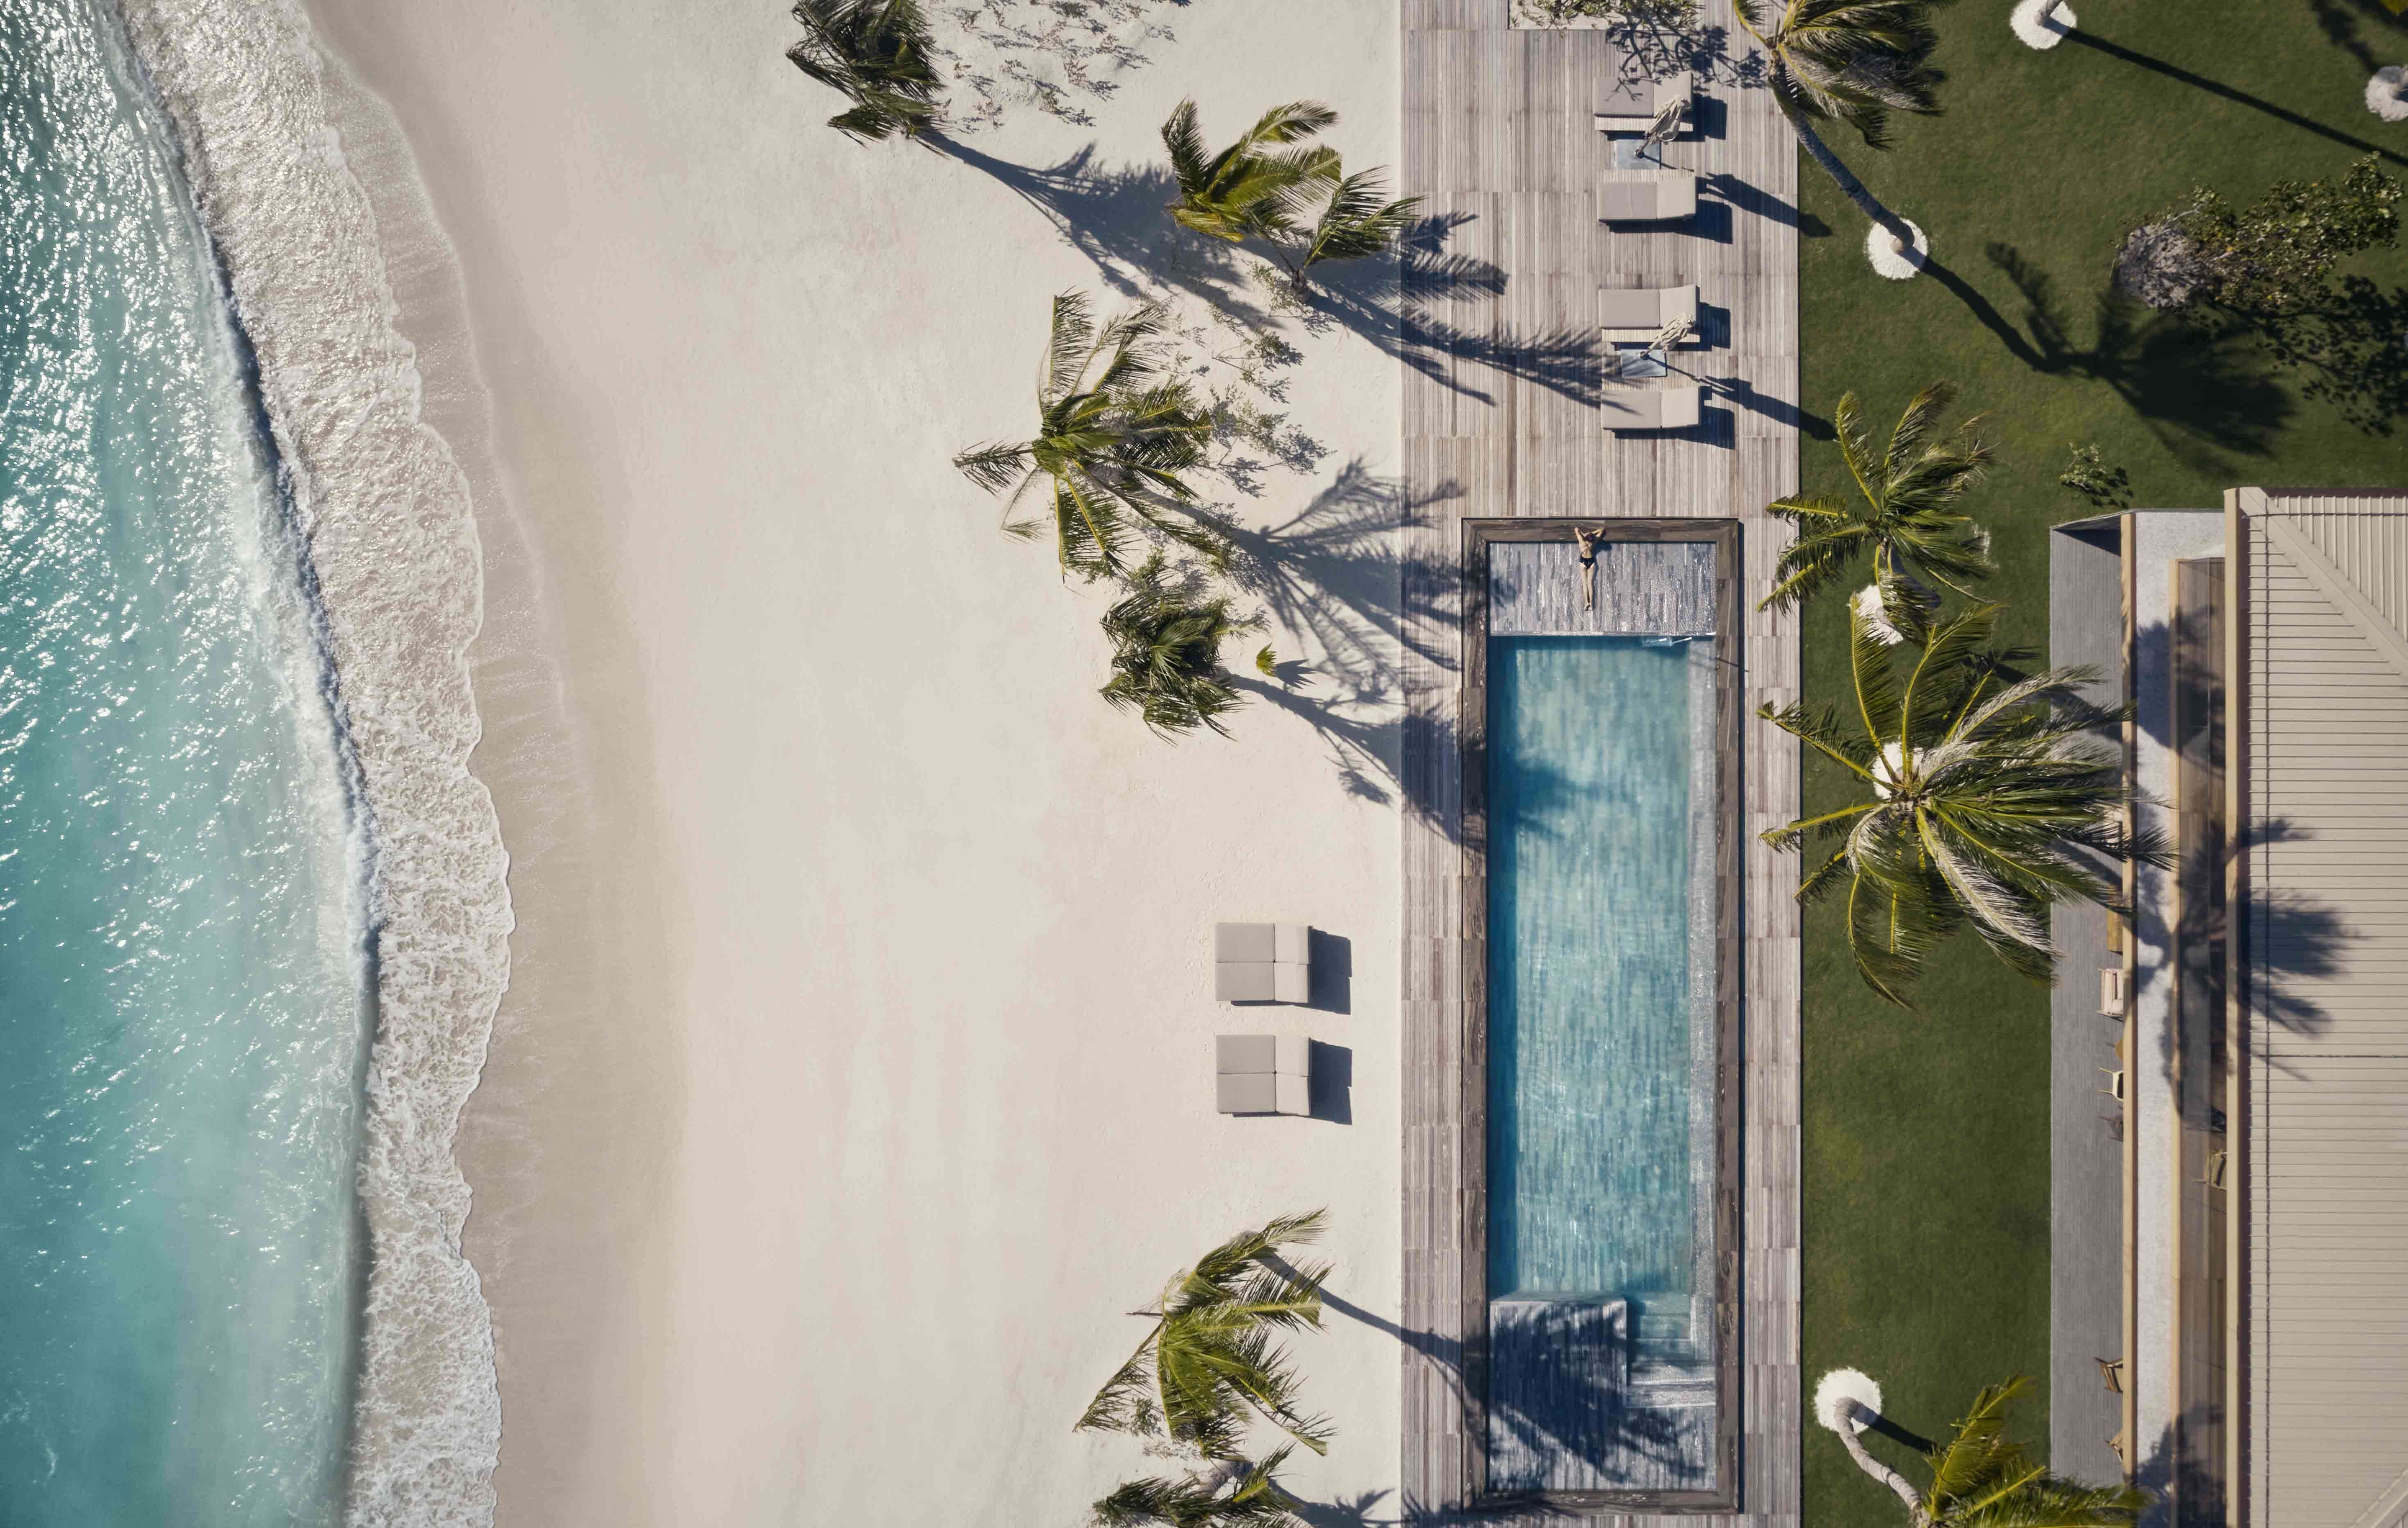 Beach House with Private Pool, Patina Maldives Fari Island 5*